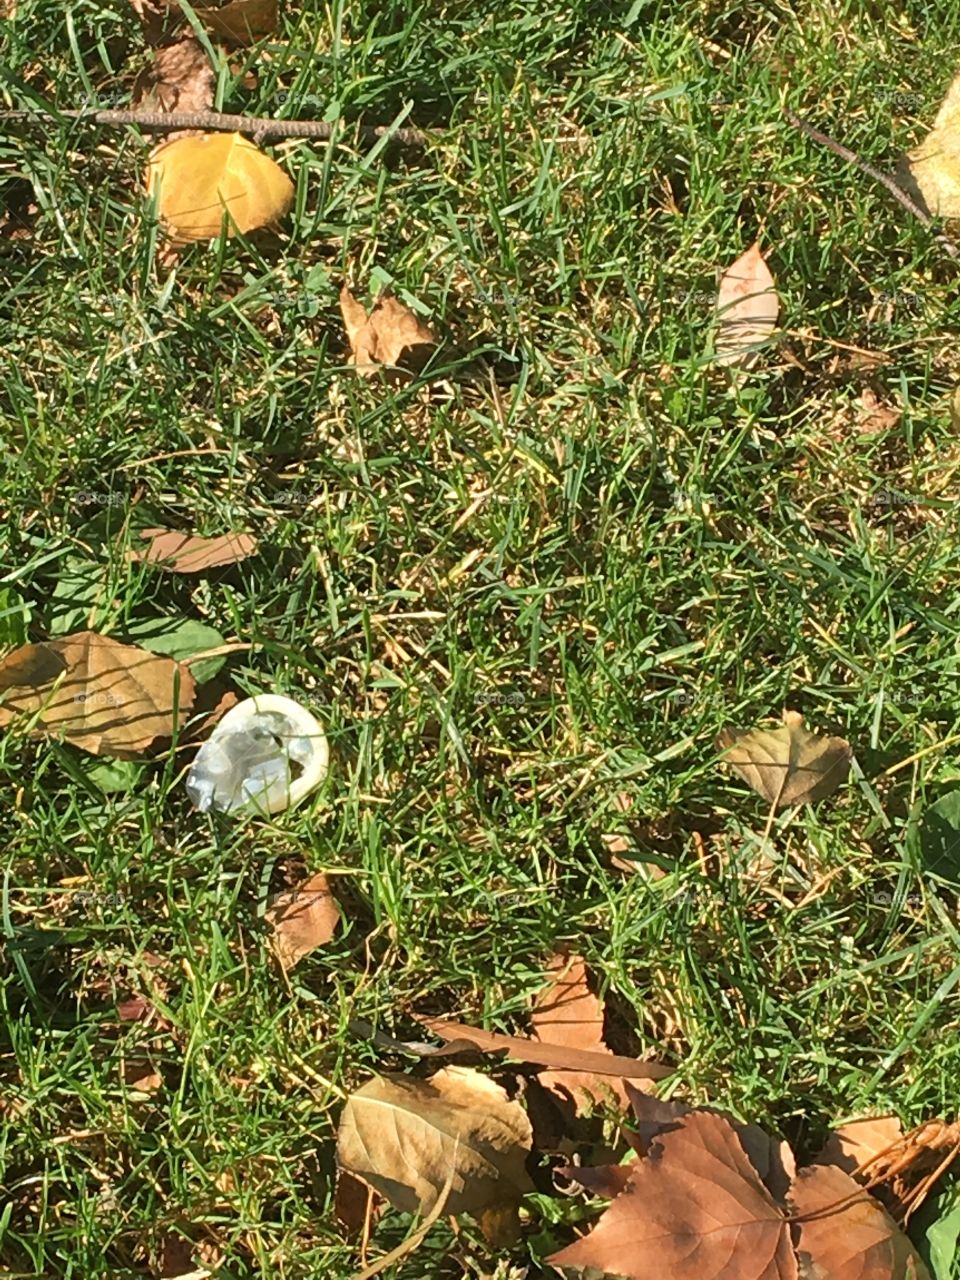 Condom on the grass